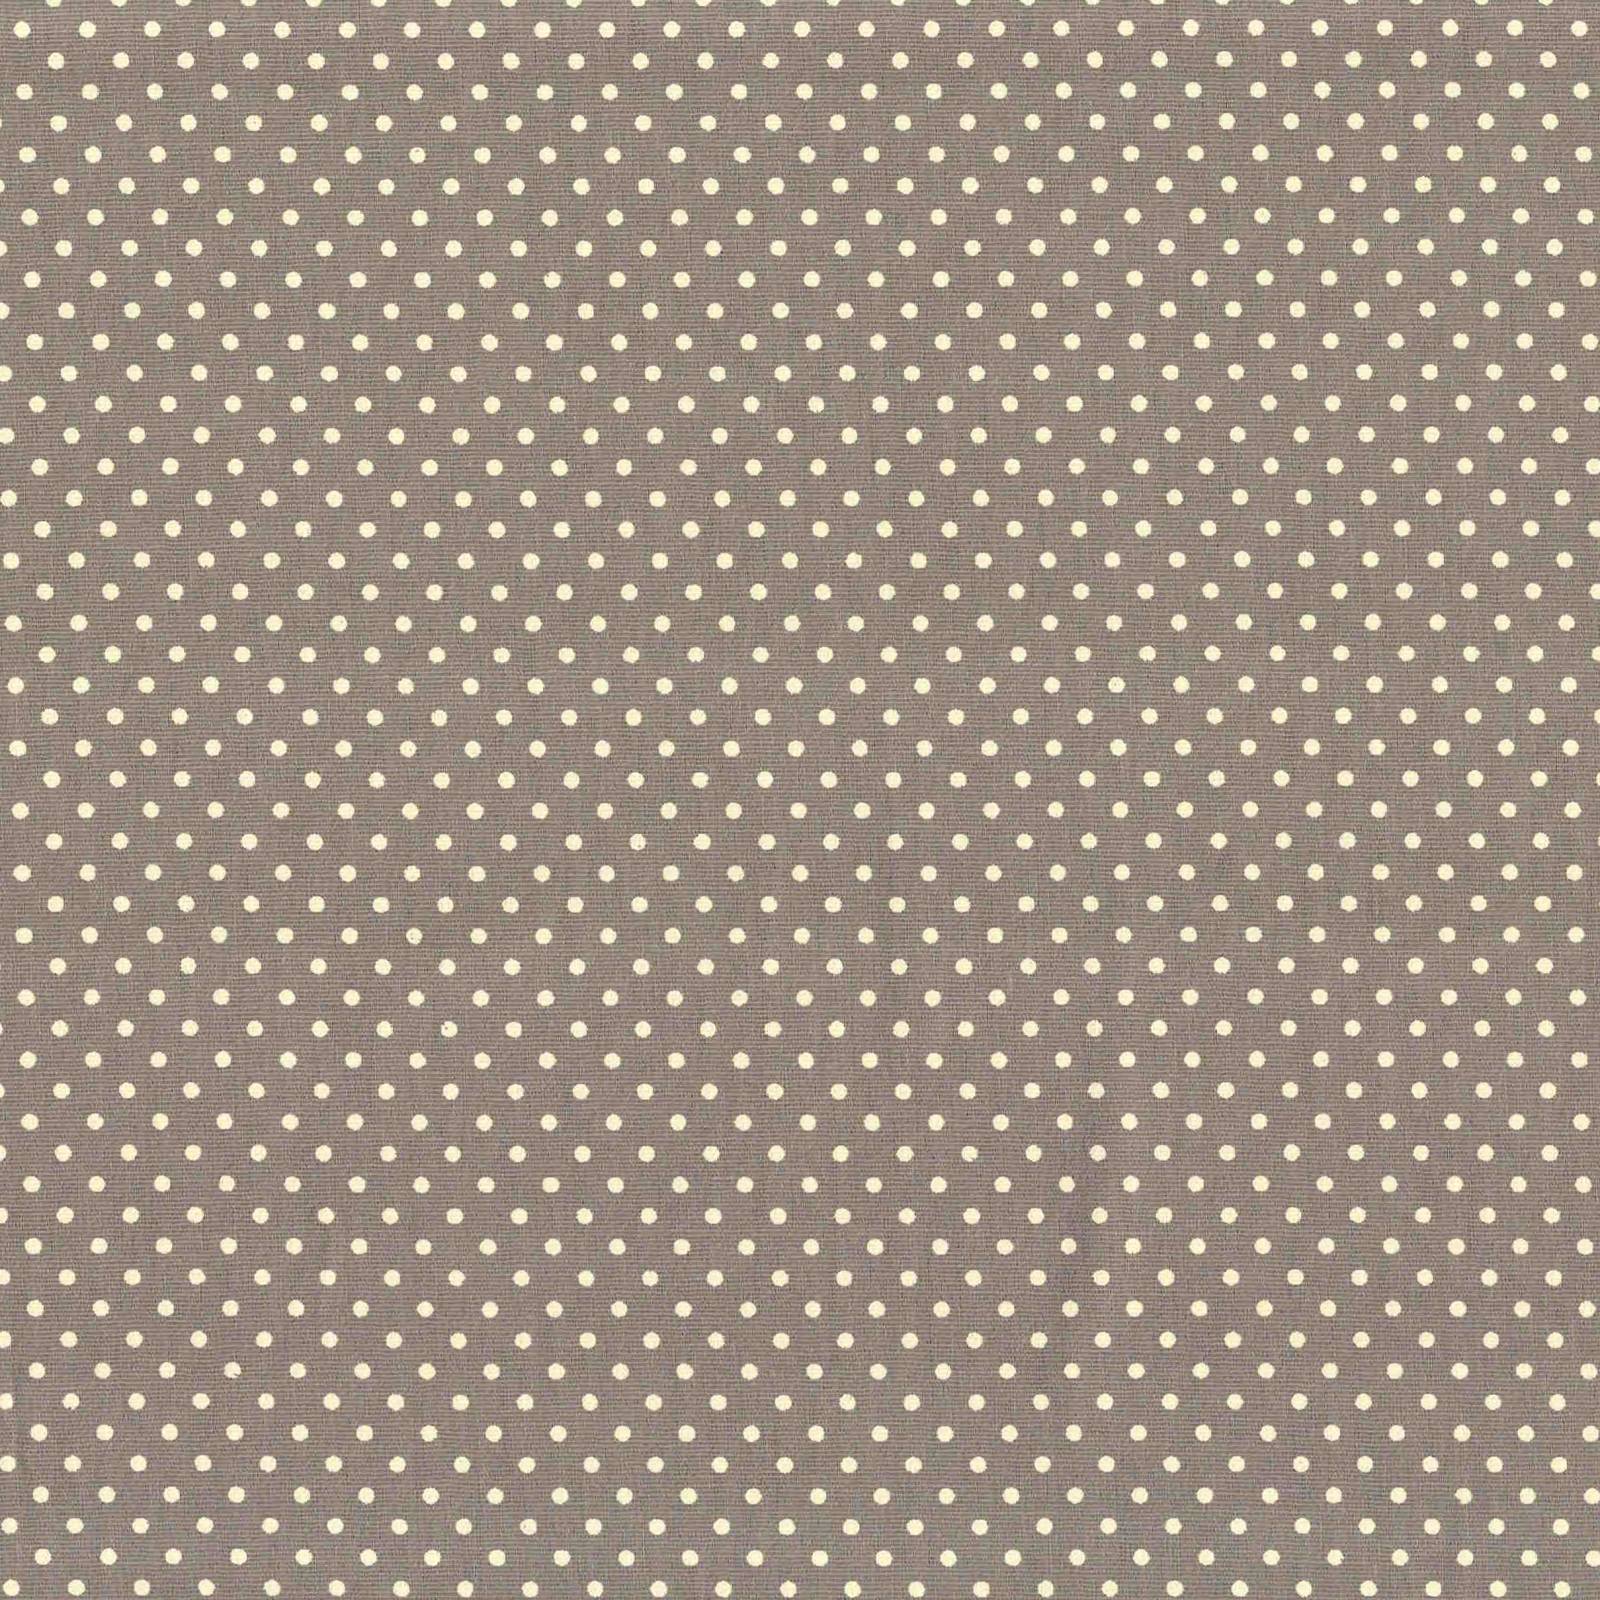 Tecido Tricoline Poá Marrom Fundo Bege - Peripan - 50 x 150 cm -  Artesanalle Tecidos